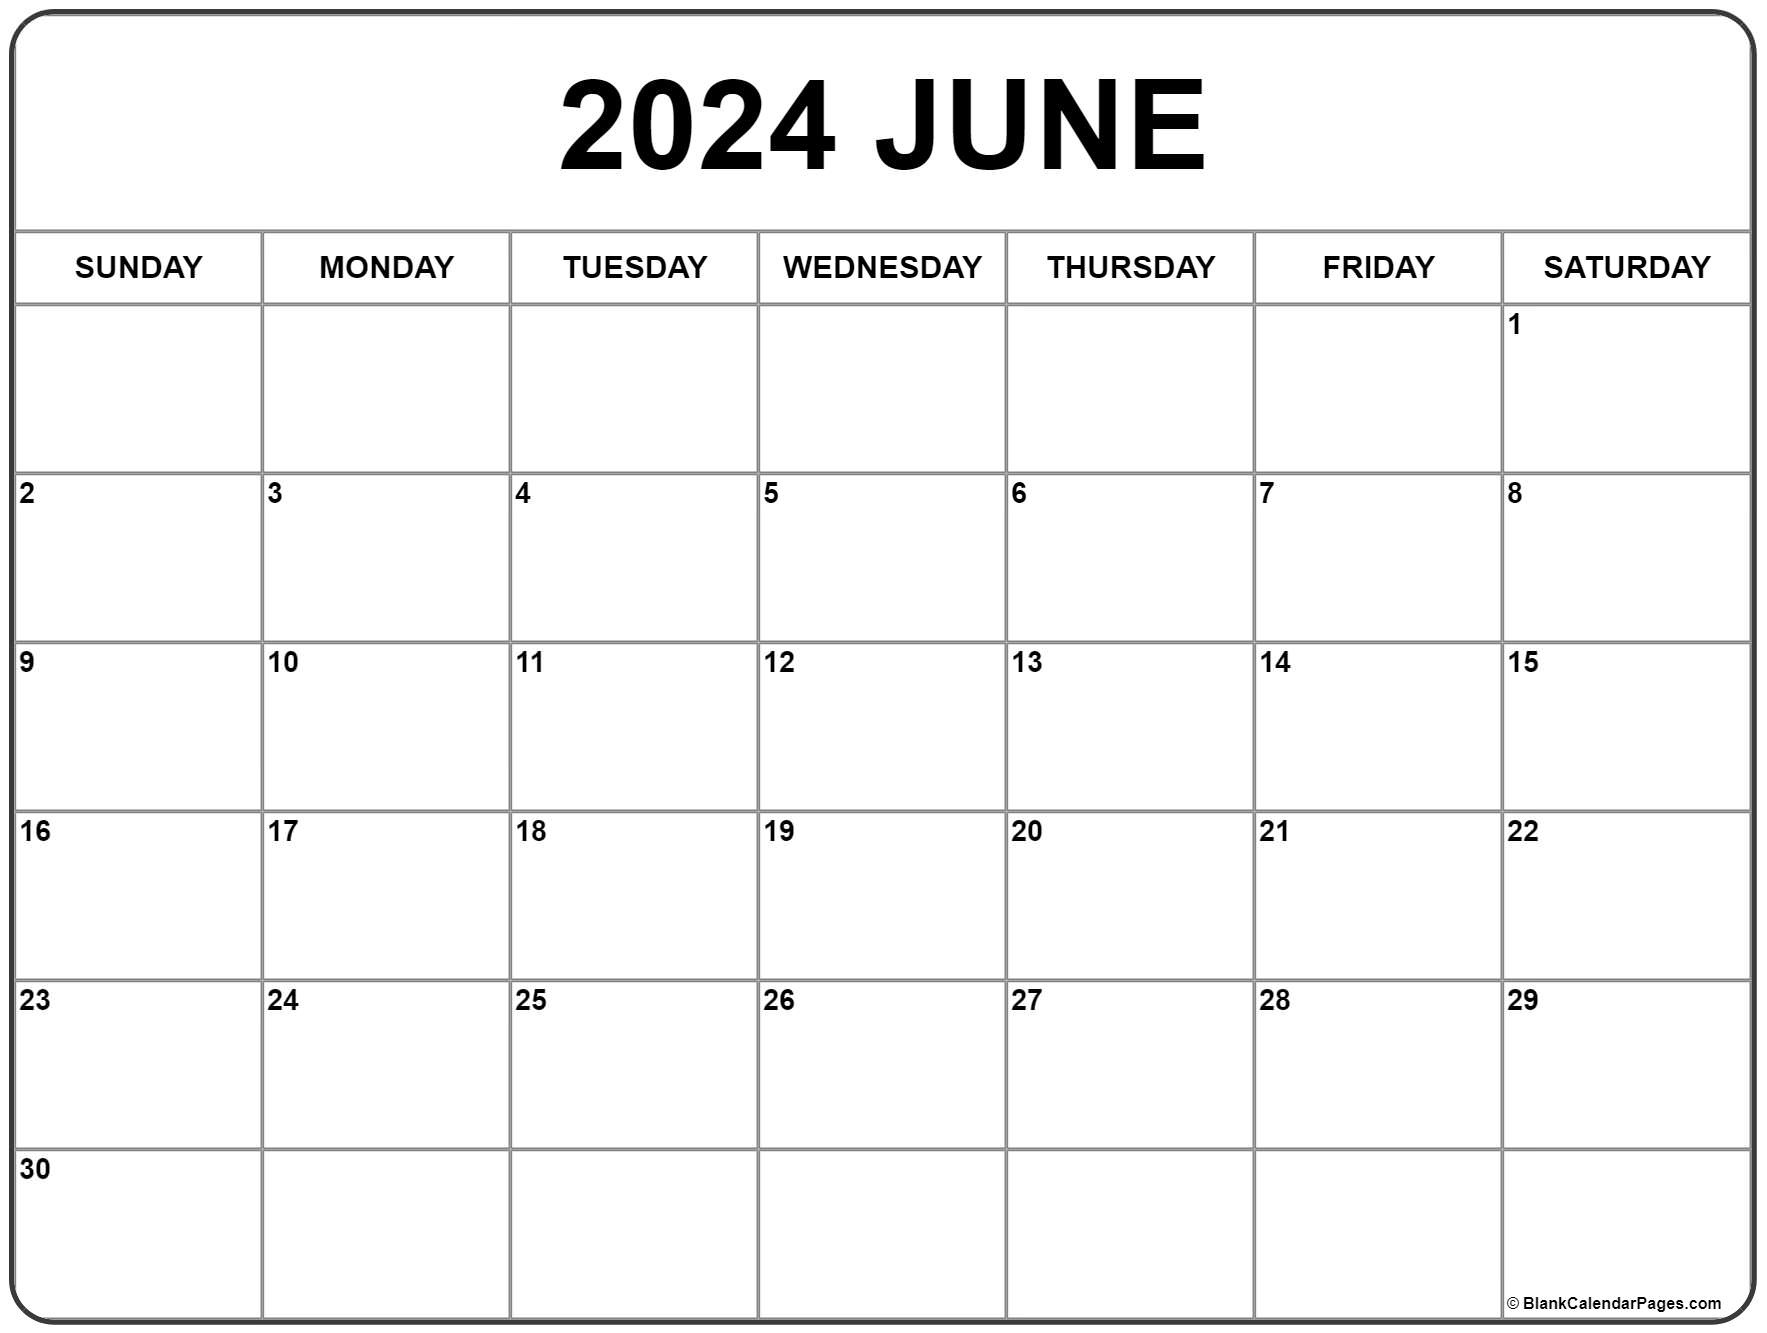 June 2024 Calendar | Free Printable Calendar pertaining to June 2024 Blank Calendar